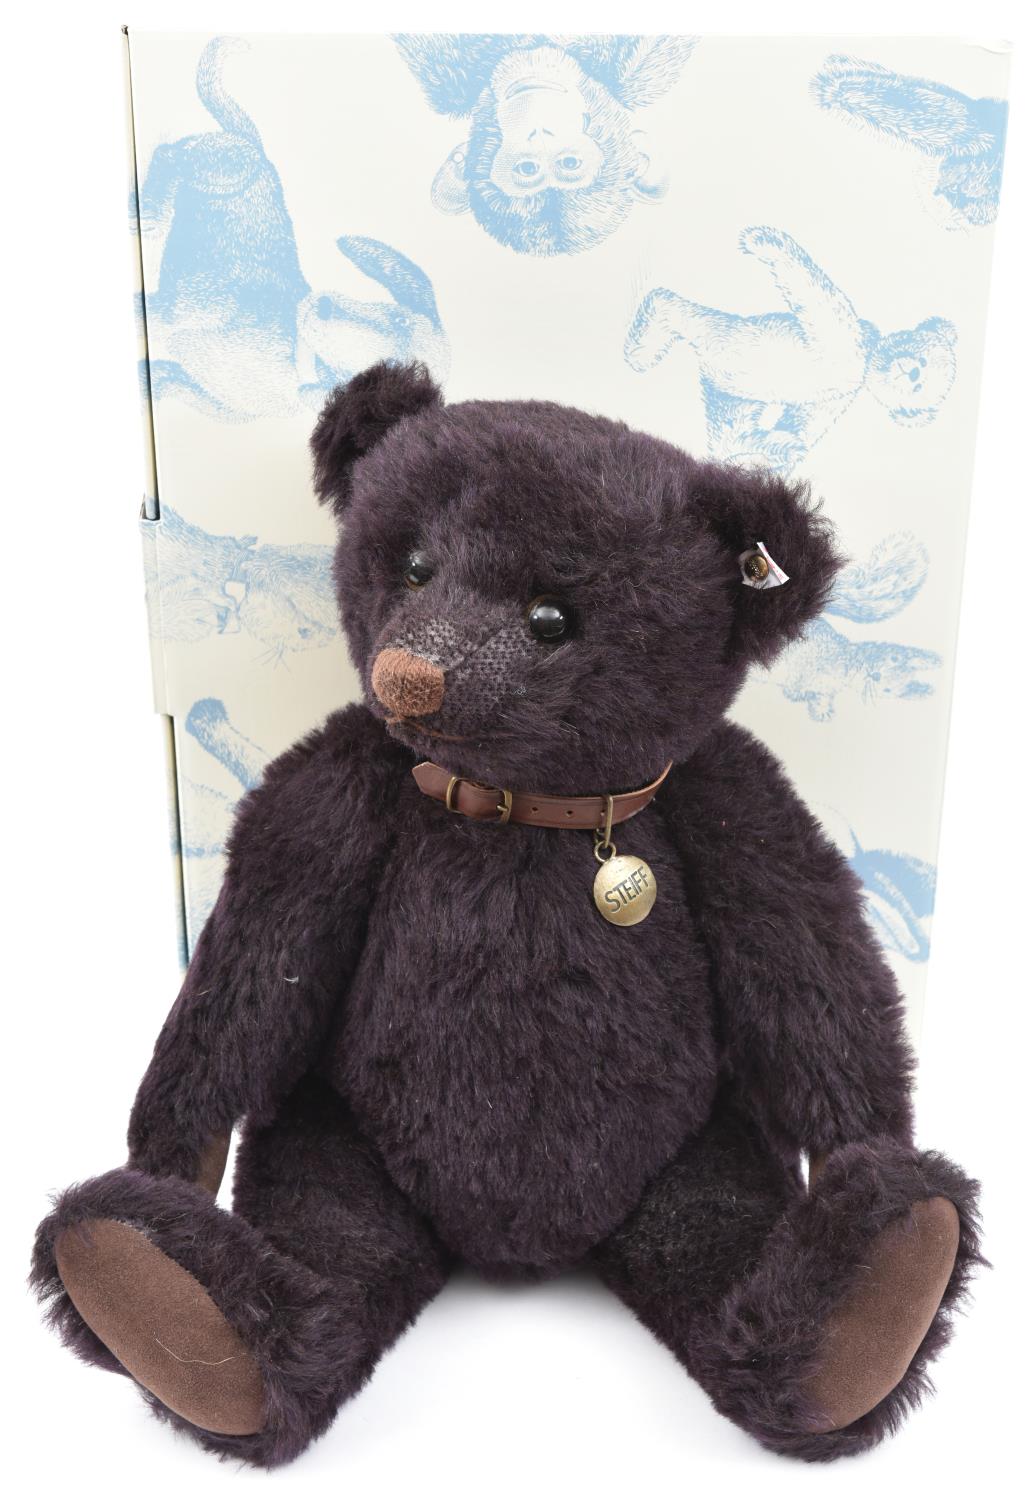 3 Steiff. A 2010 North American Limited Edition Teddy Bear, Prince-The Purple Trademark Bear (